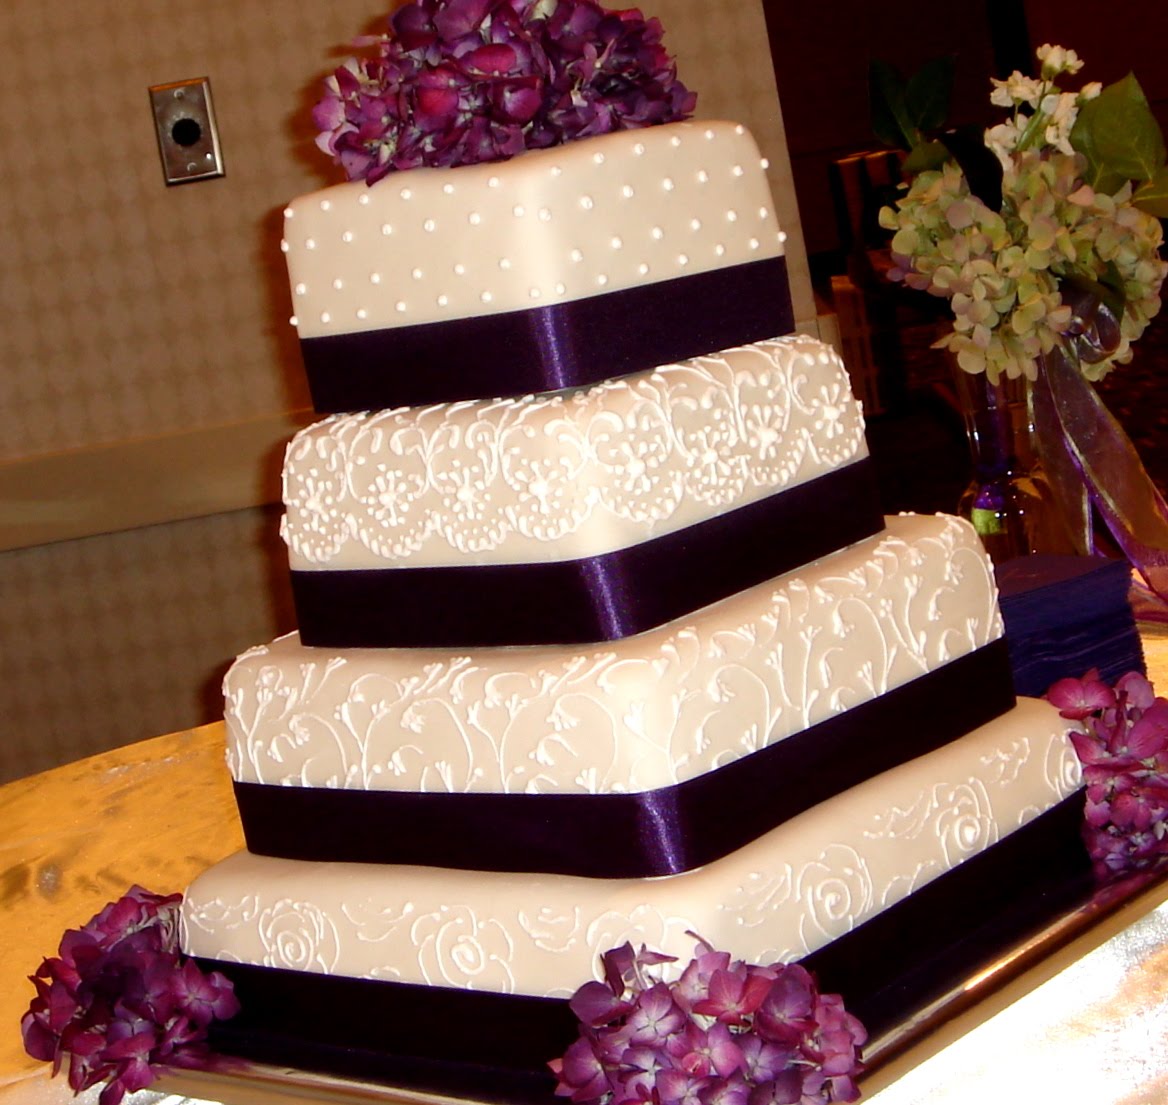 http://4.bp.blogspot.com/_CXxZUo2Y2QI/Szqzo07AebI/AAAAAAAADoo/7l95qC9SgOI/s1600/fondant+wedding+cake+with+scroll+work,+purple+ribbon+and+flowers+final.jpg